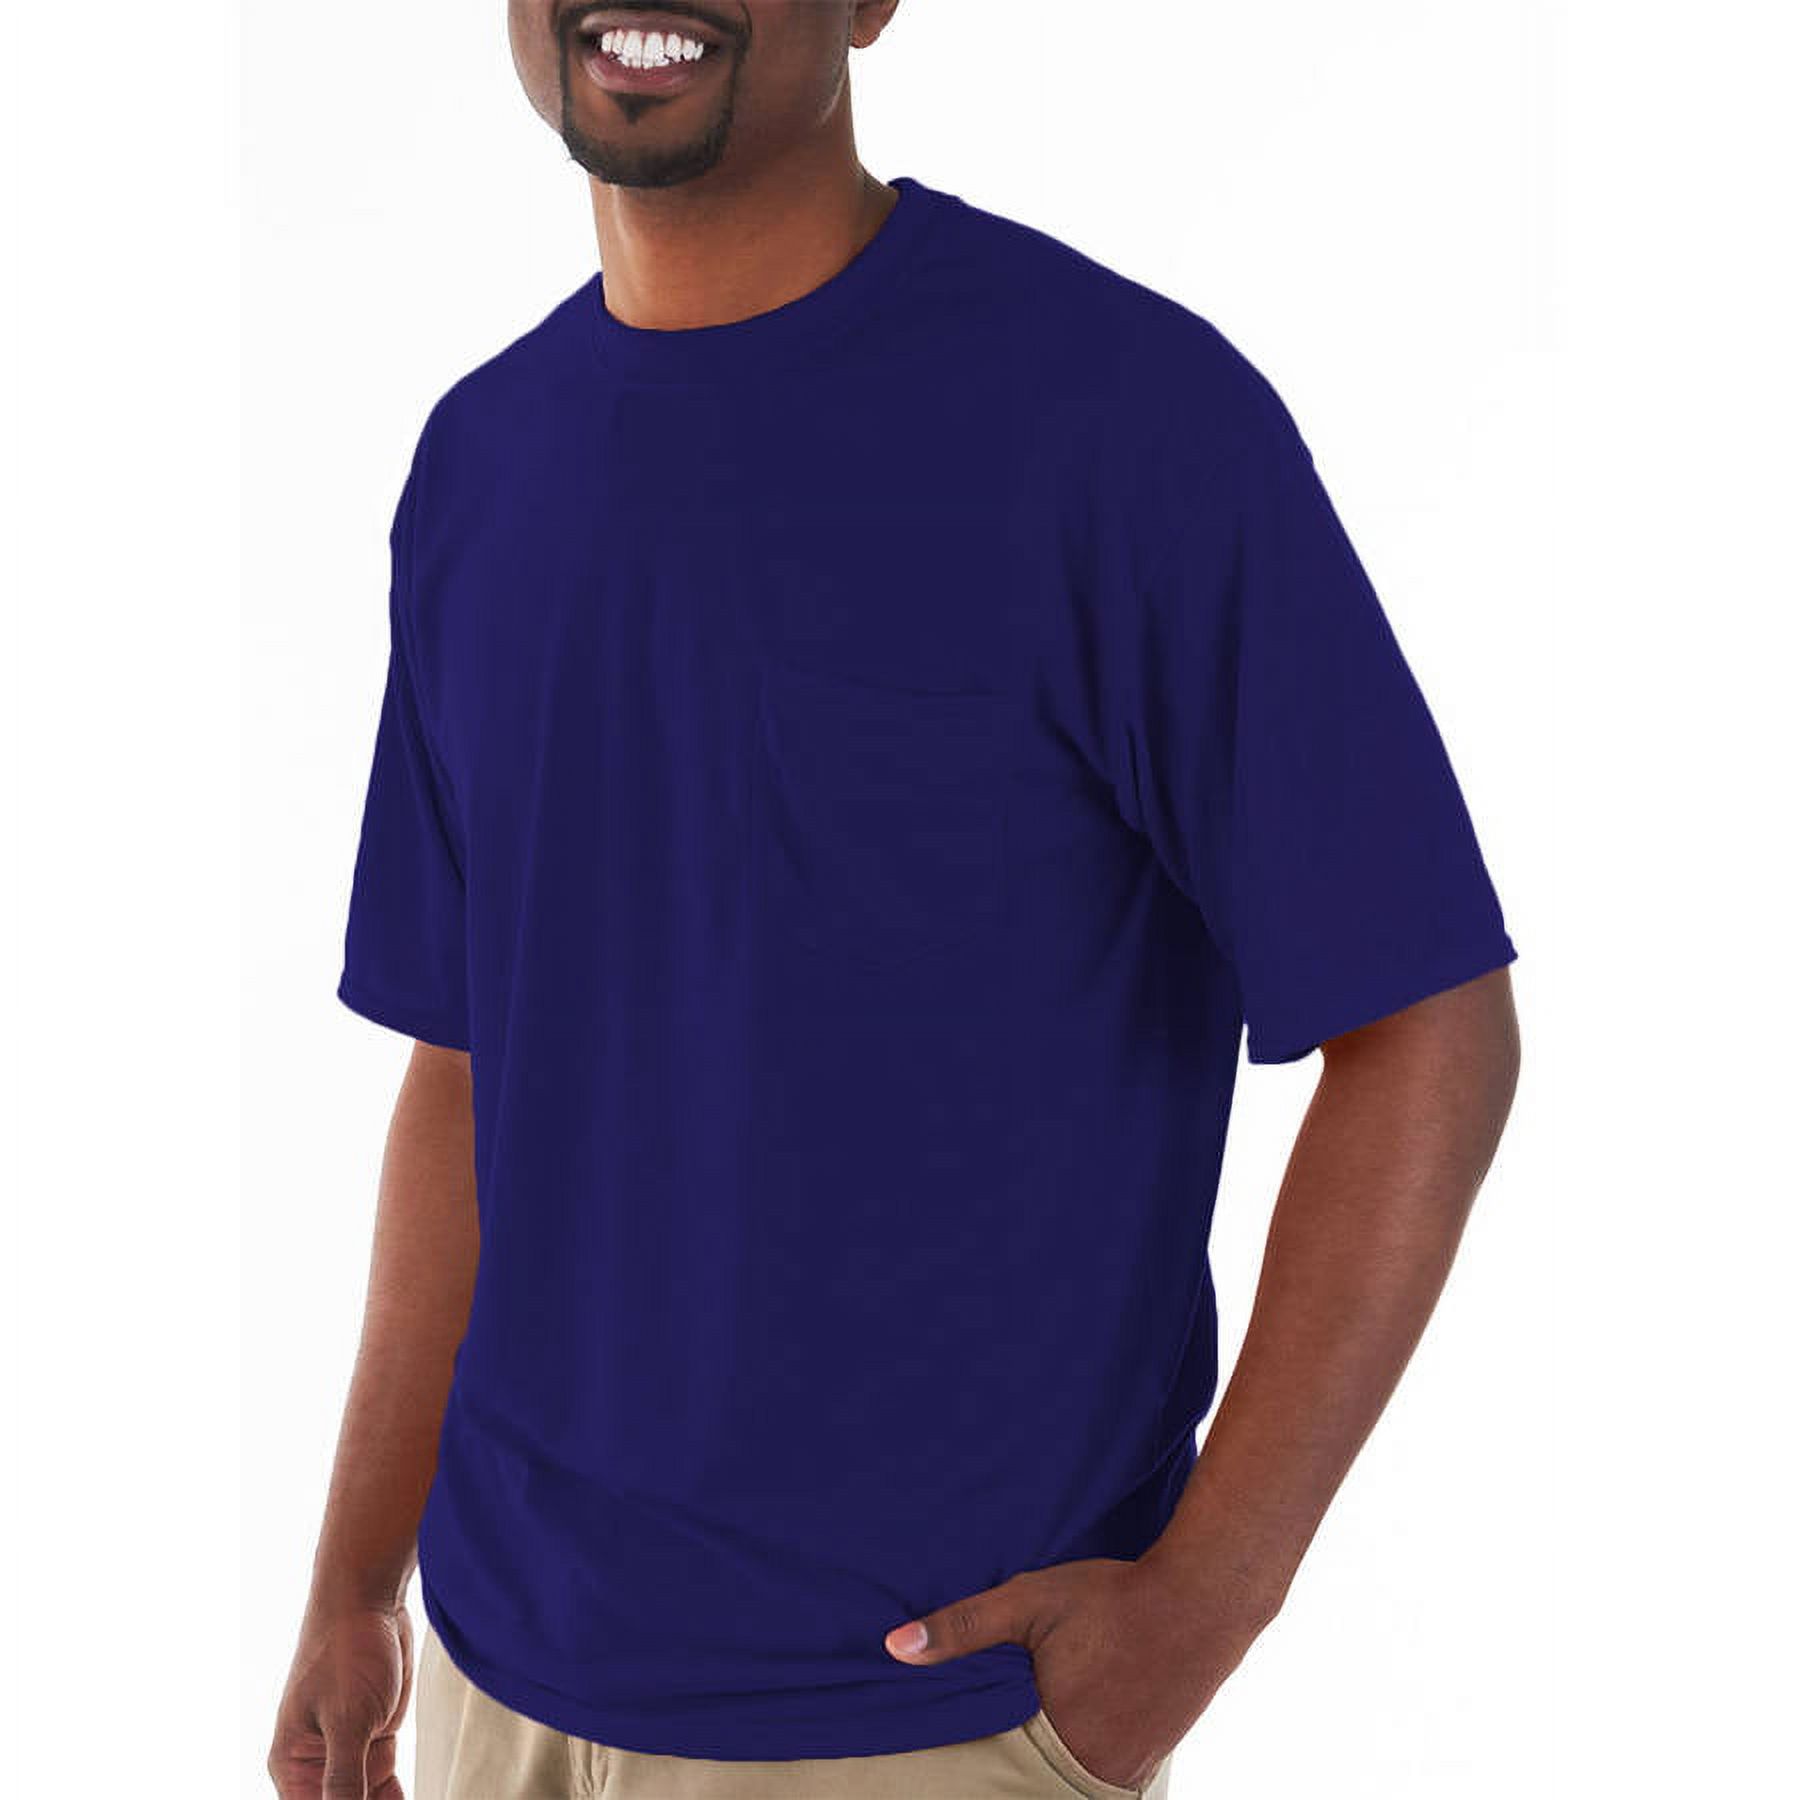 Gildan Mens classic short sleeve t-shirt with pocket - image 1 of 2